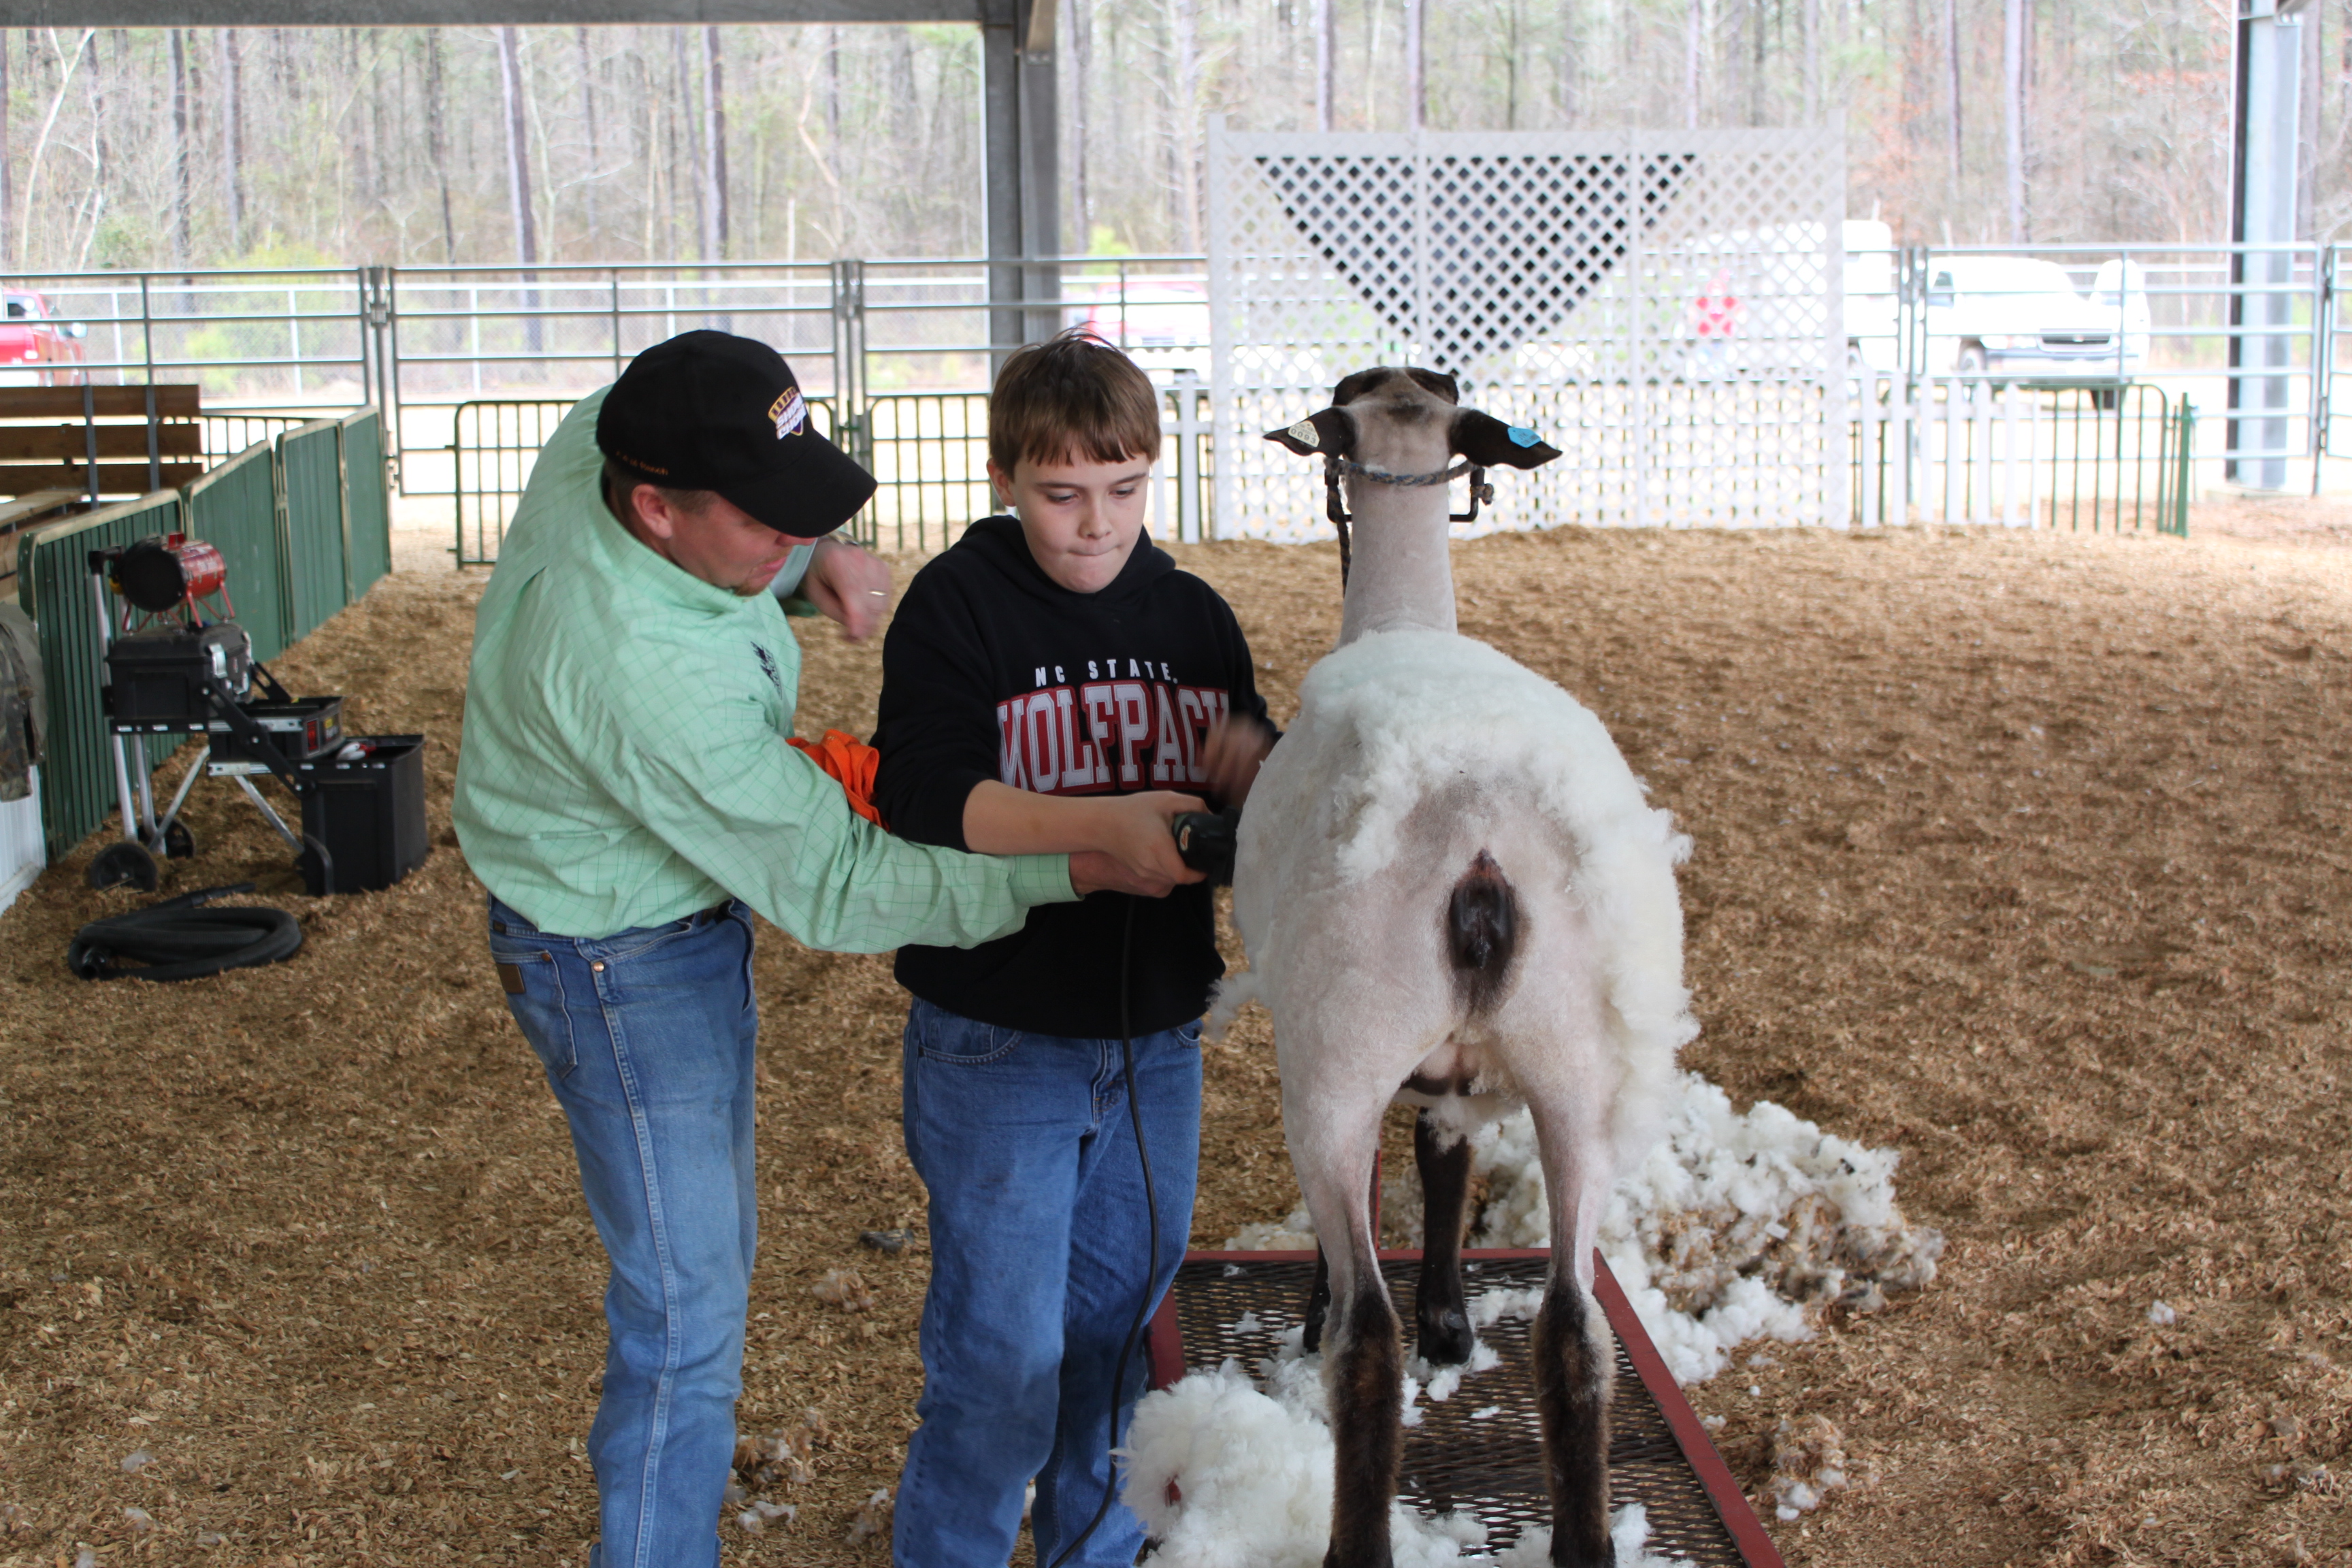 Shearing livestock